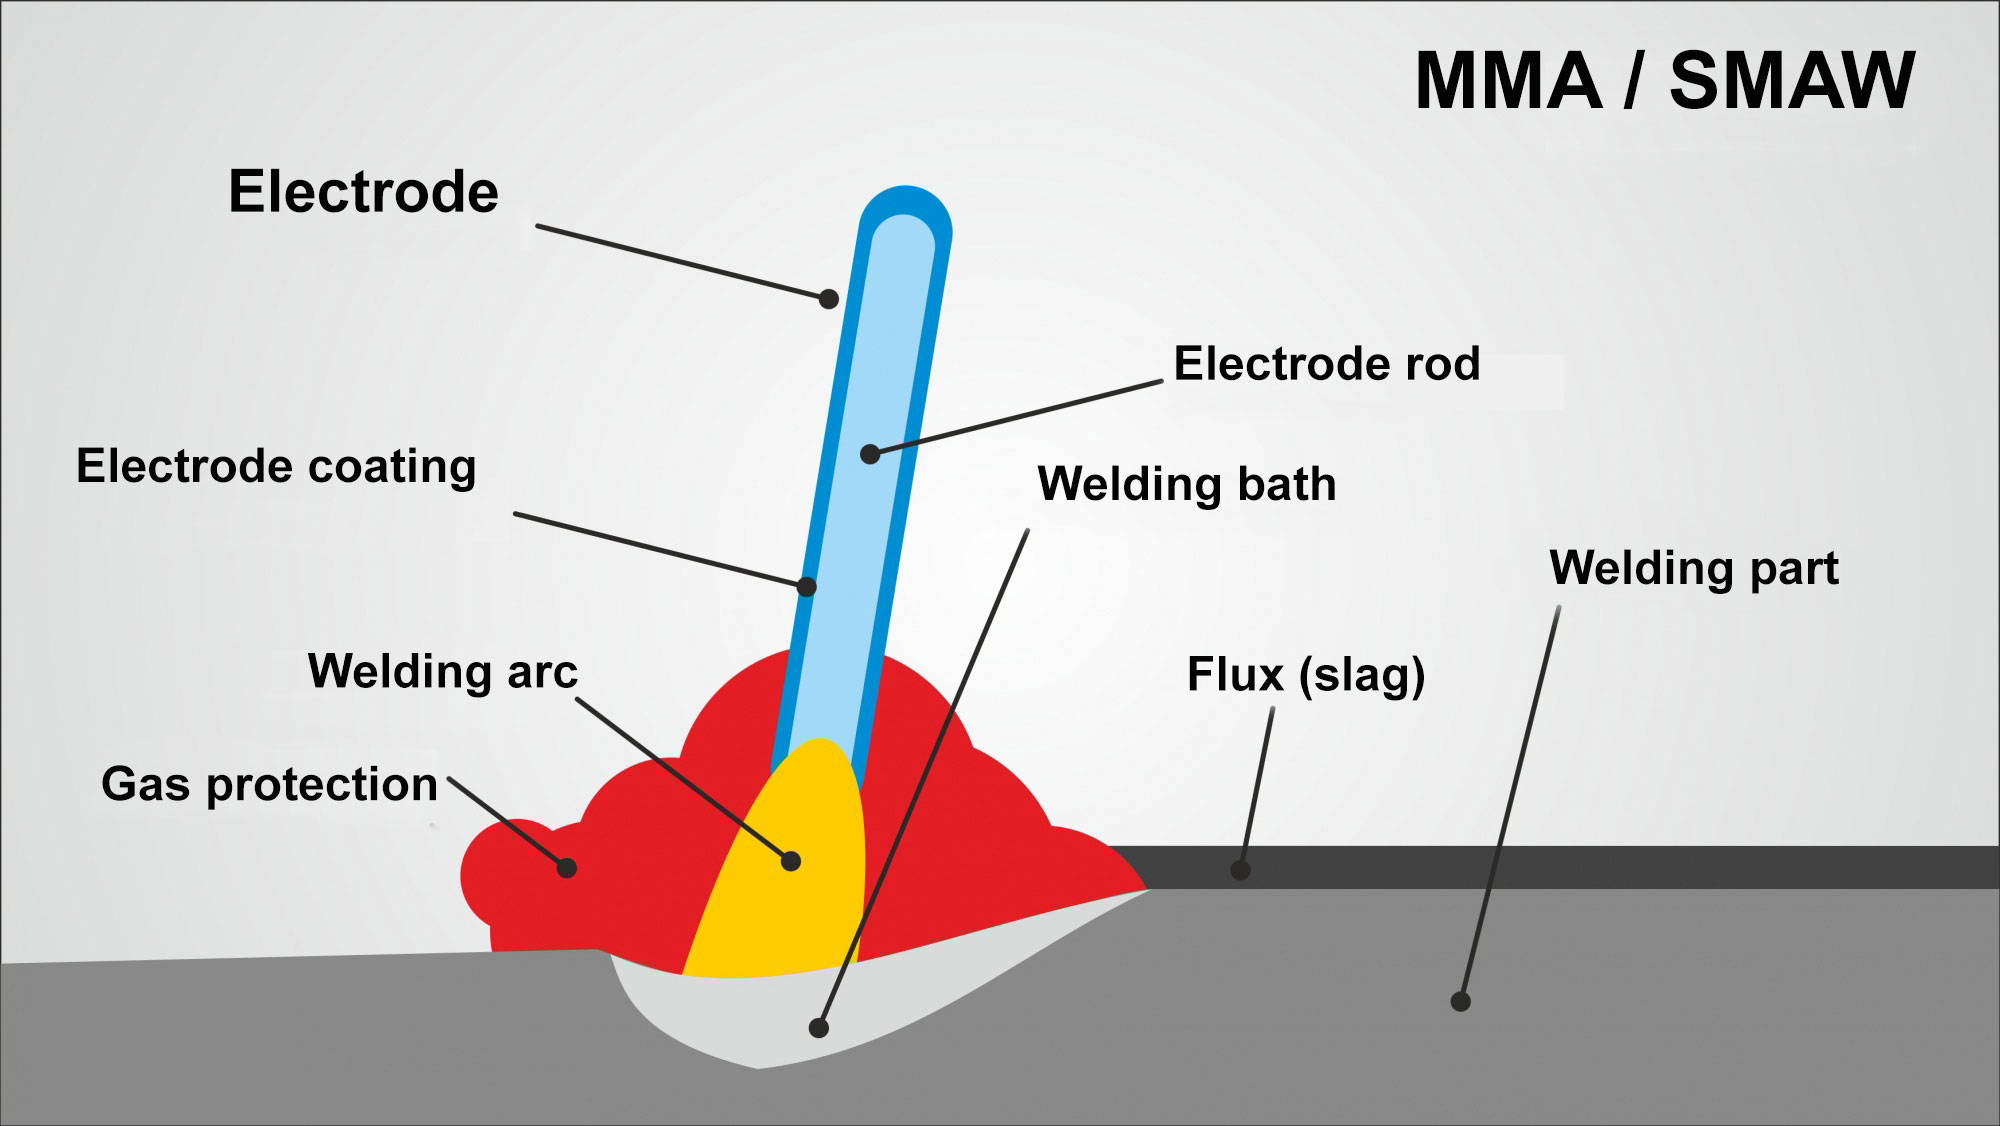 MMA / SMAW welding type